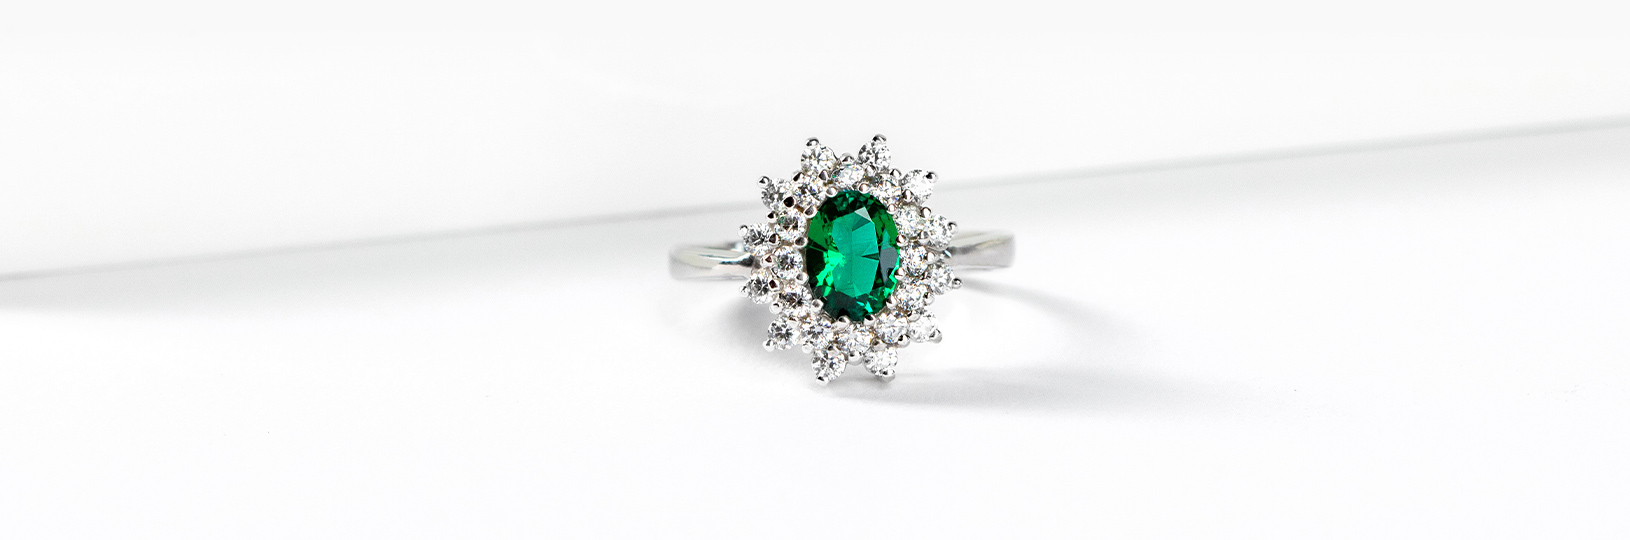 Halo emerald engagement ring